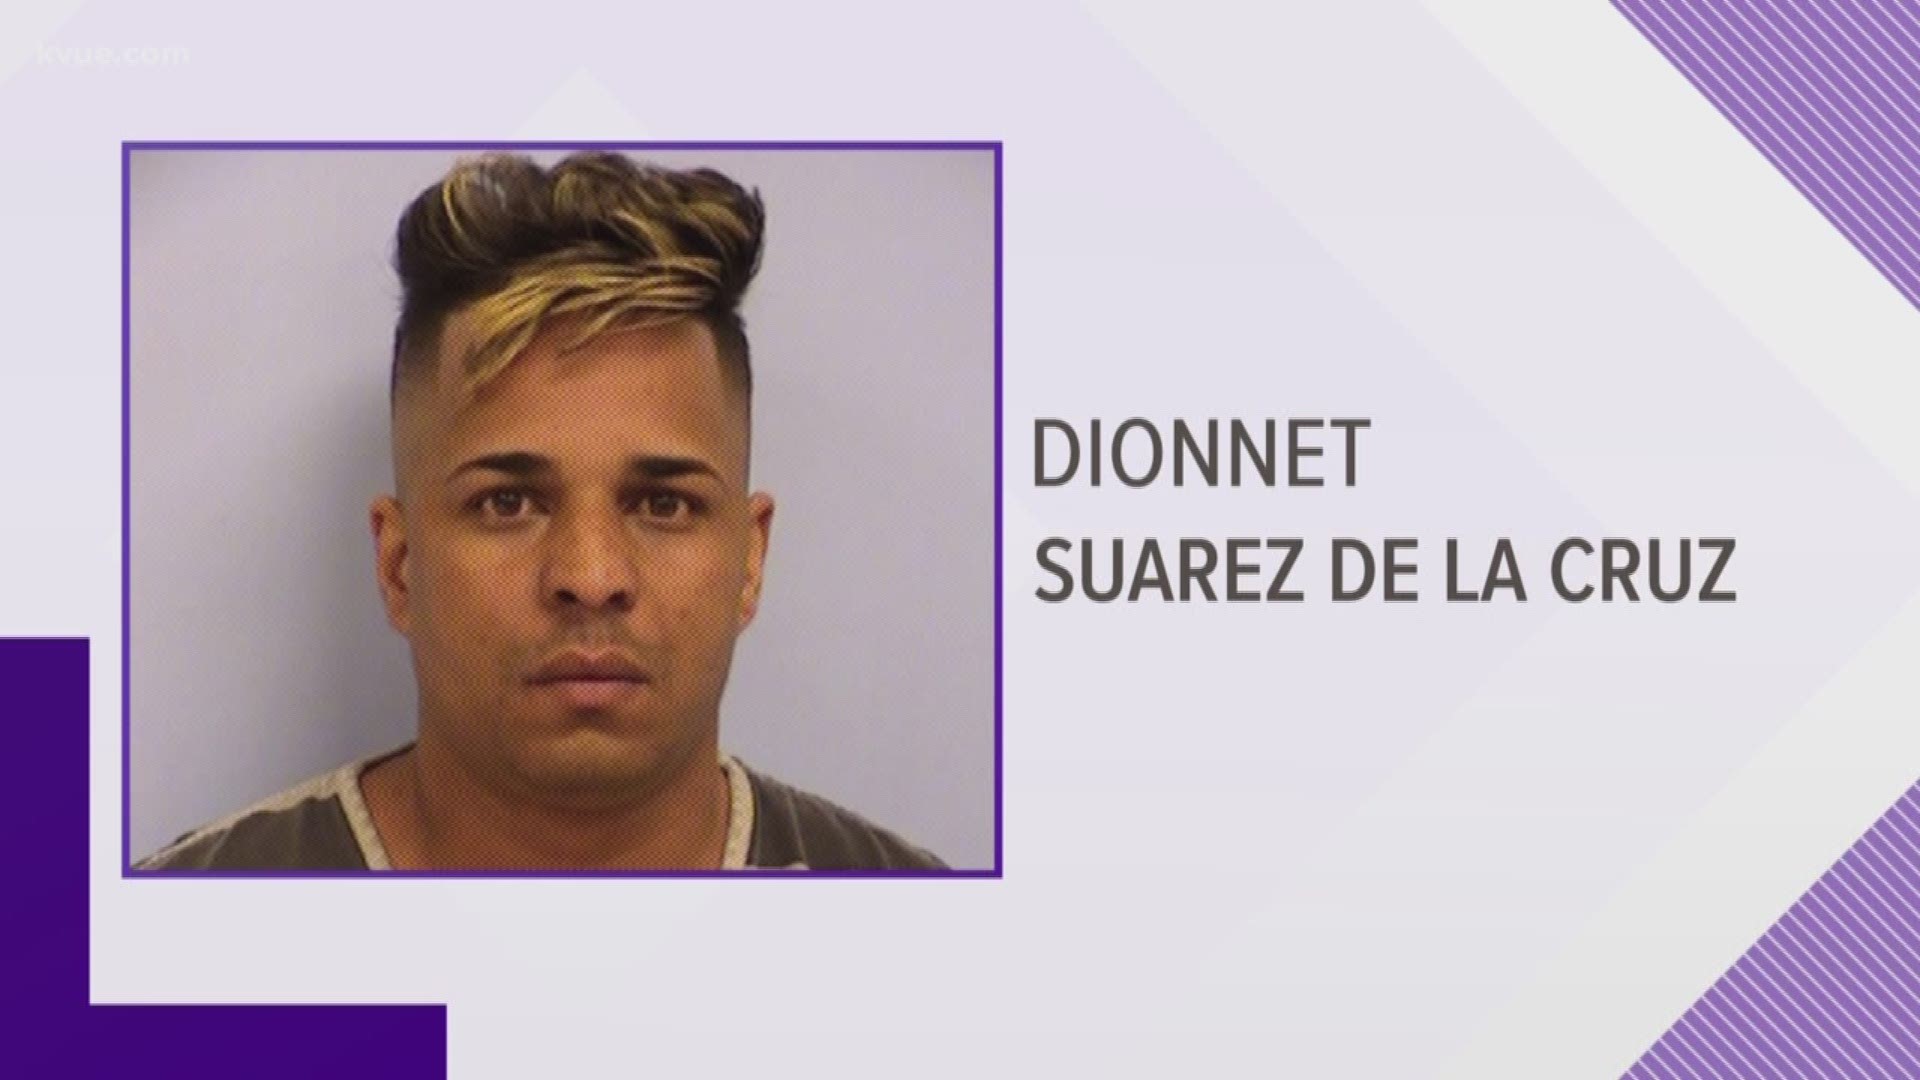 Dionnet Suarez De La Cruz crashed head-on into Felipe Ramirez, who died at the scene.